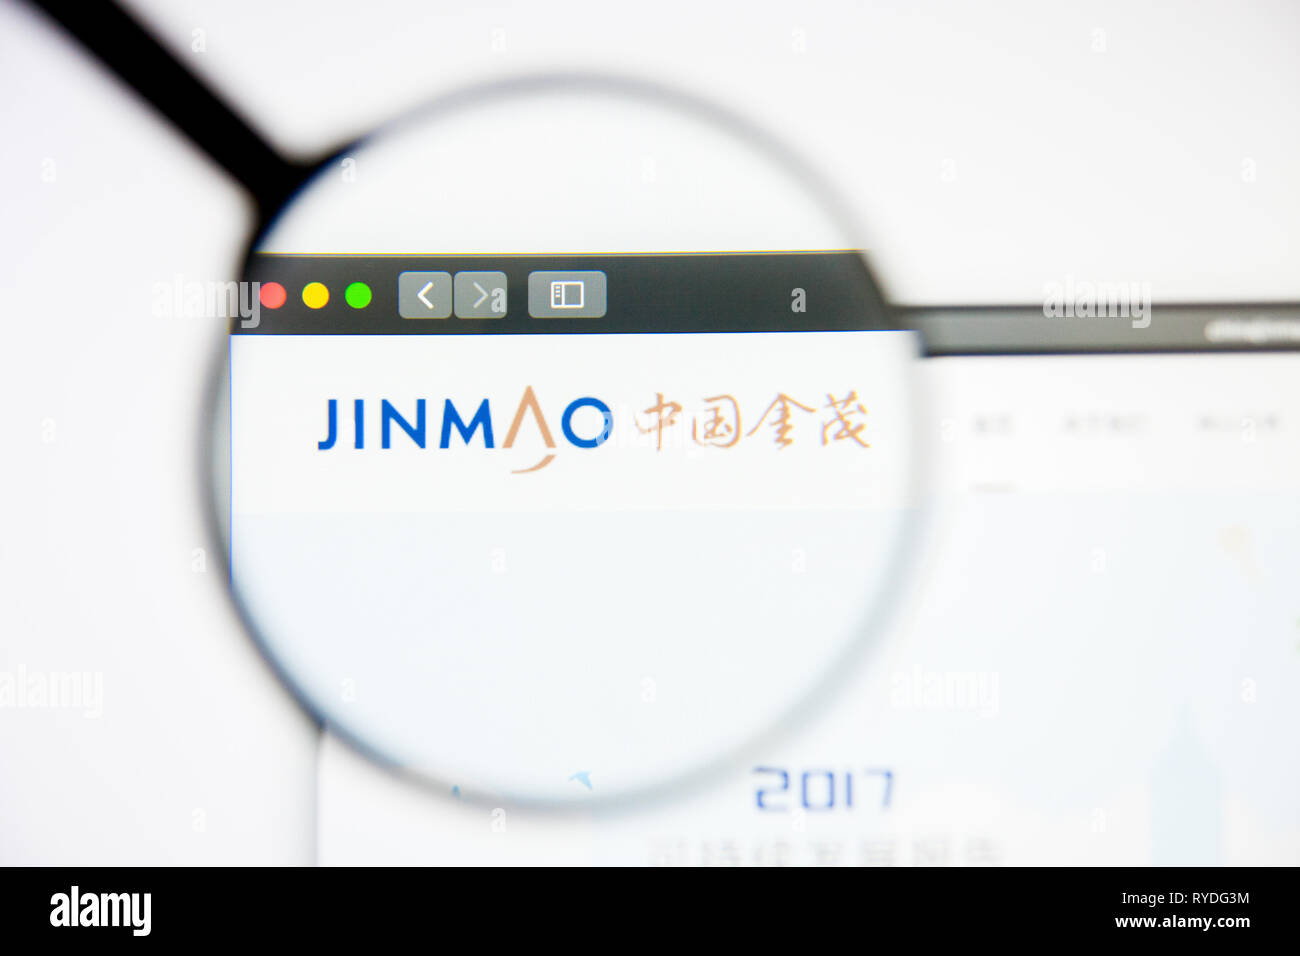 Los Angeles, Kalifornien, USA - 5. März 2019: China Jinmao Homepage. China Jinmao Logo sichtbar auf dem Display, Illustrative Editorial Stockfoto